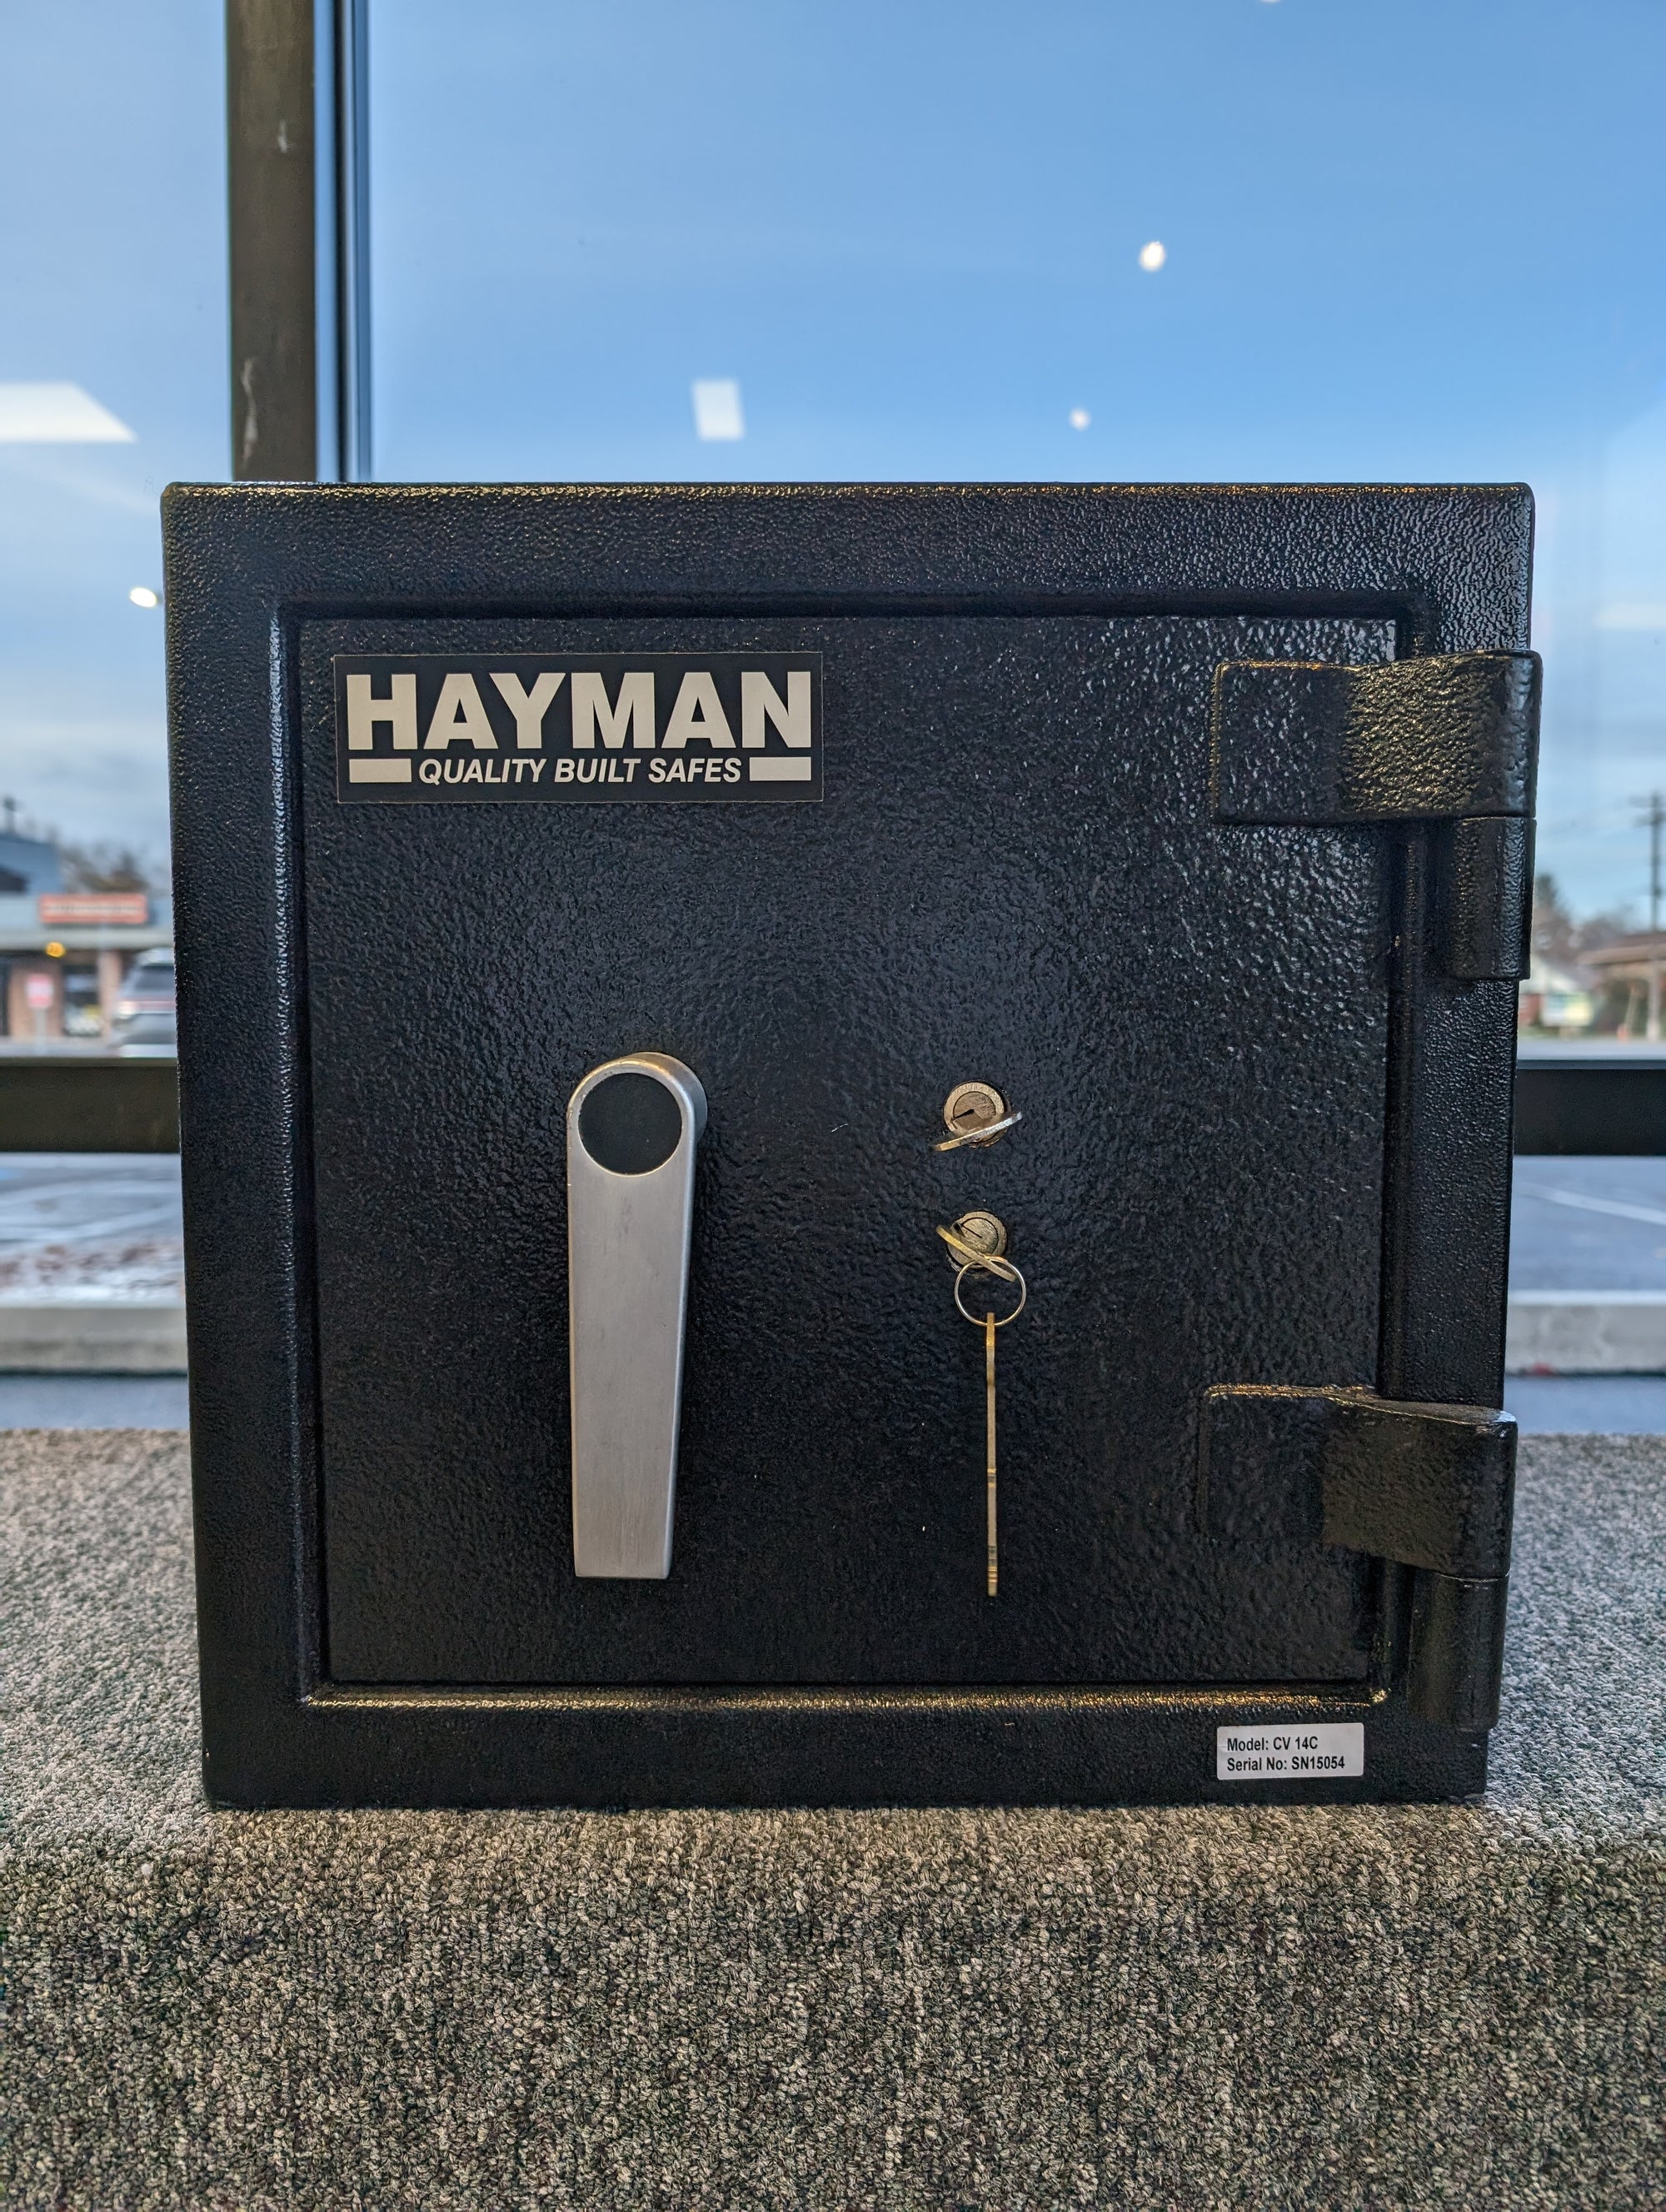 Hayman CV-14-KK Scratch and Dent front